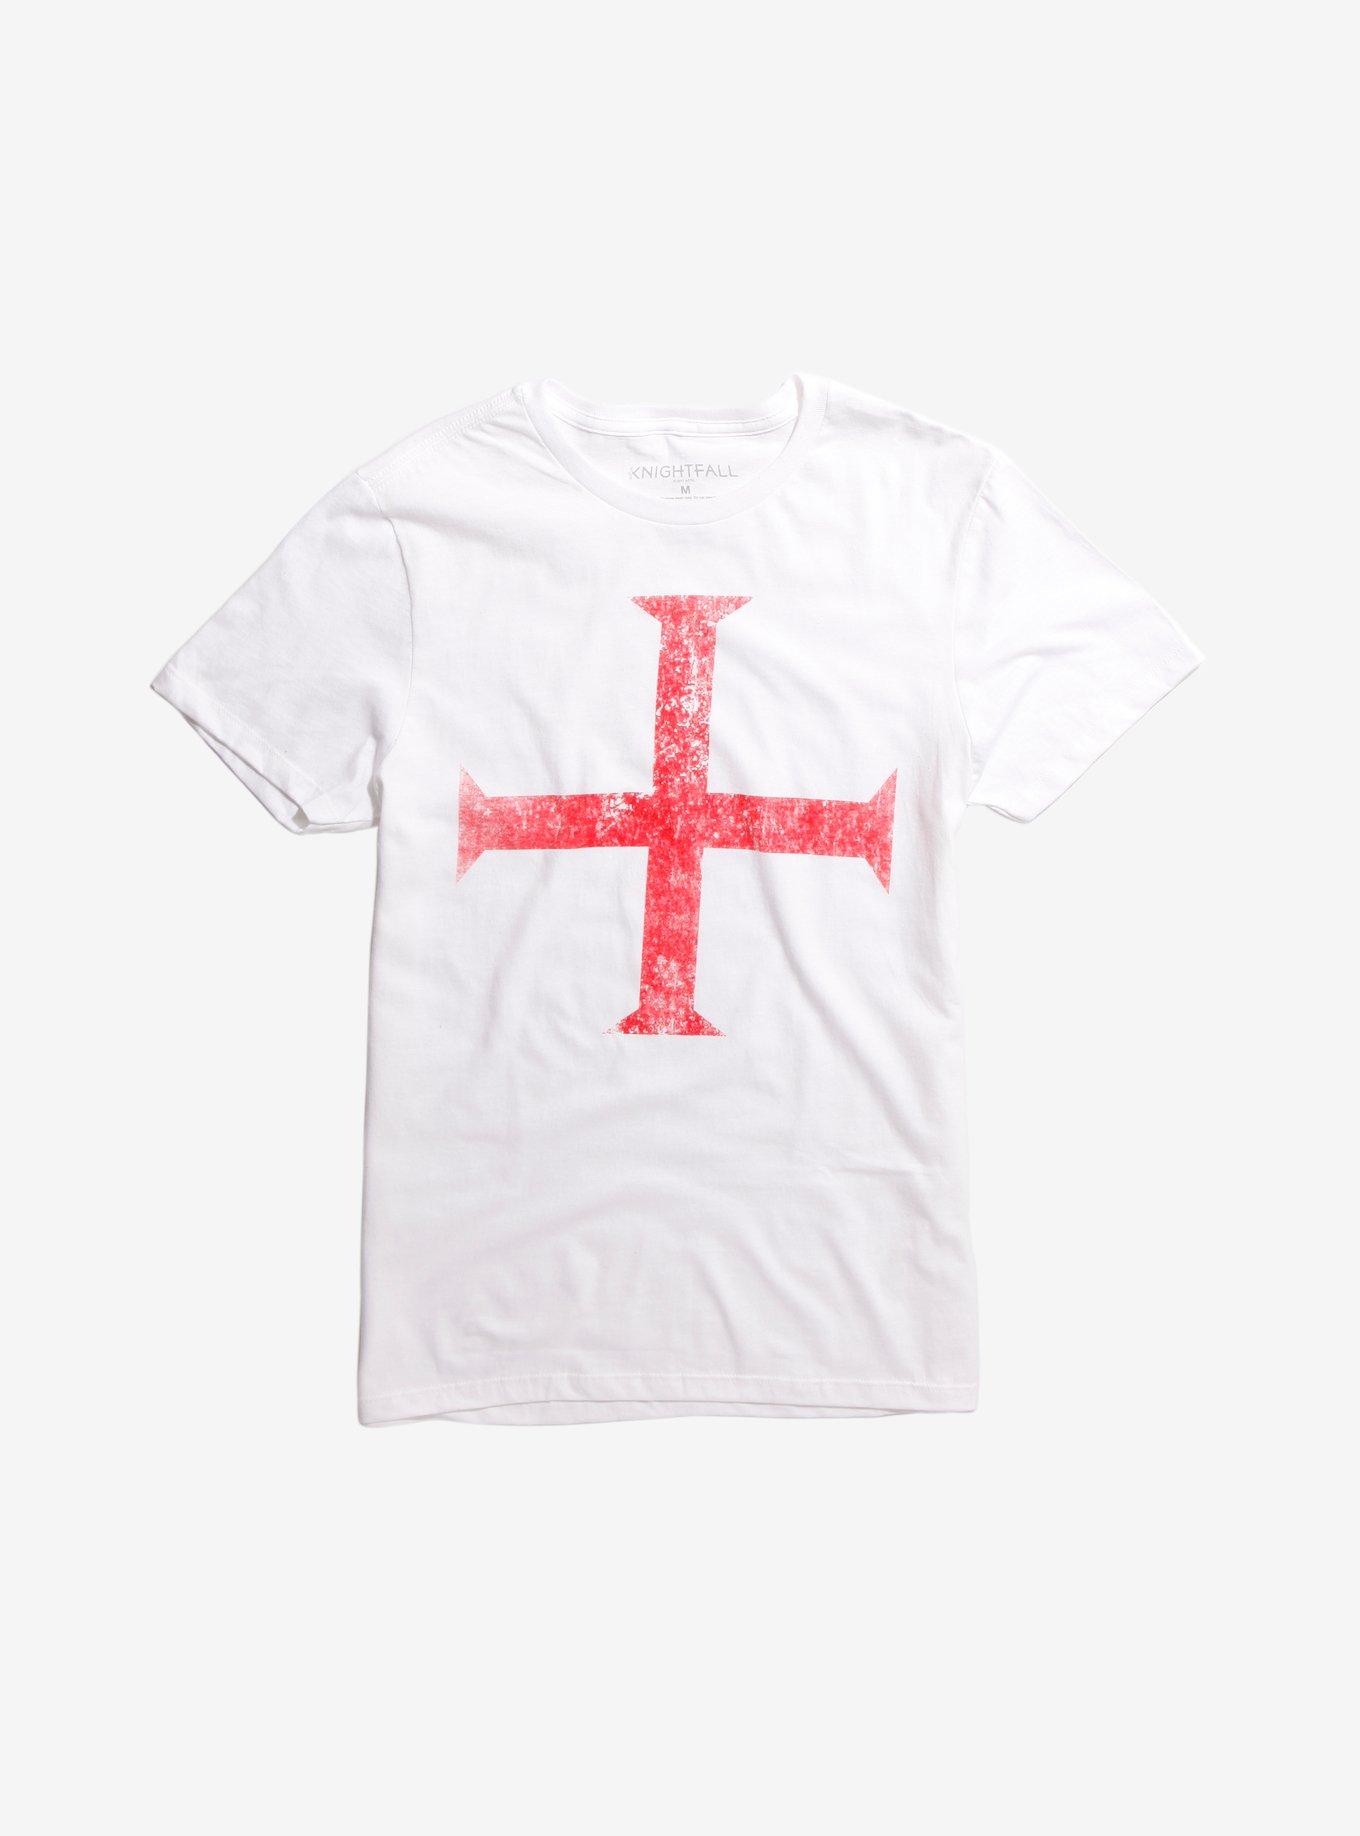 Knightfall Knights Templar T-Shirt | Hot Topic